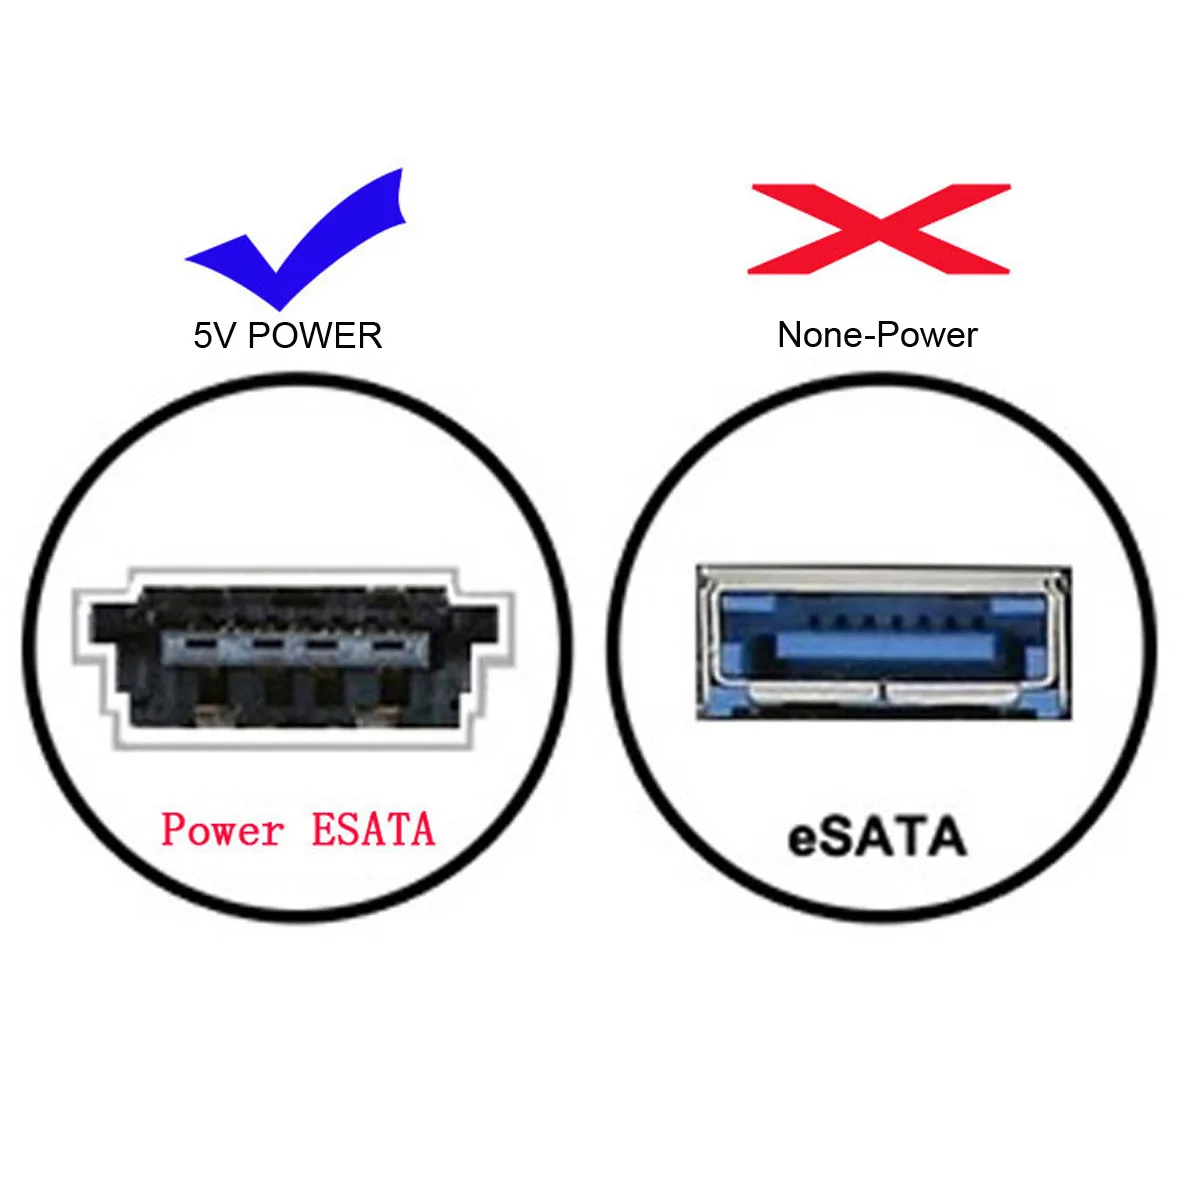 CY esata į usb kabelis USB-C Tipo-C Power Over eSATA DC5V USB3 Adapteris.0 HDD/SSD/NELYGINIS eSATAp Skaičiuoklė